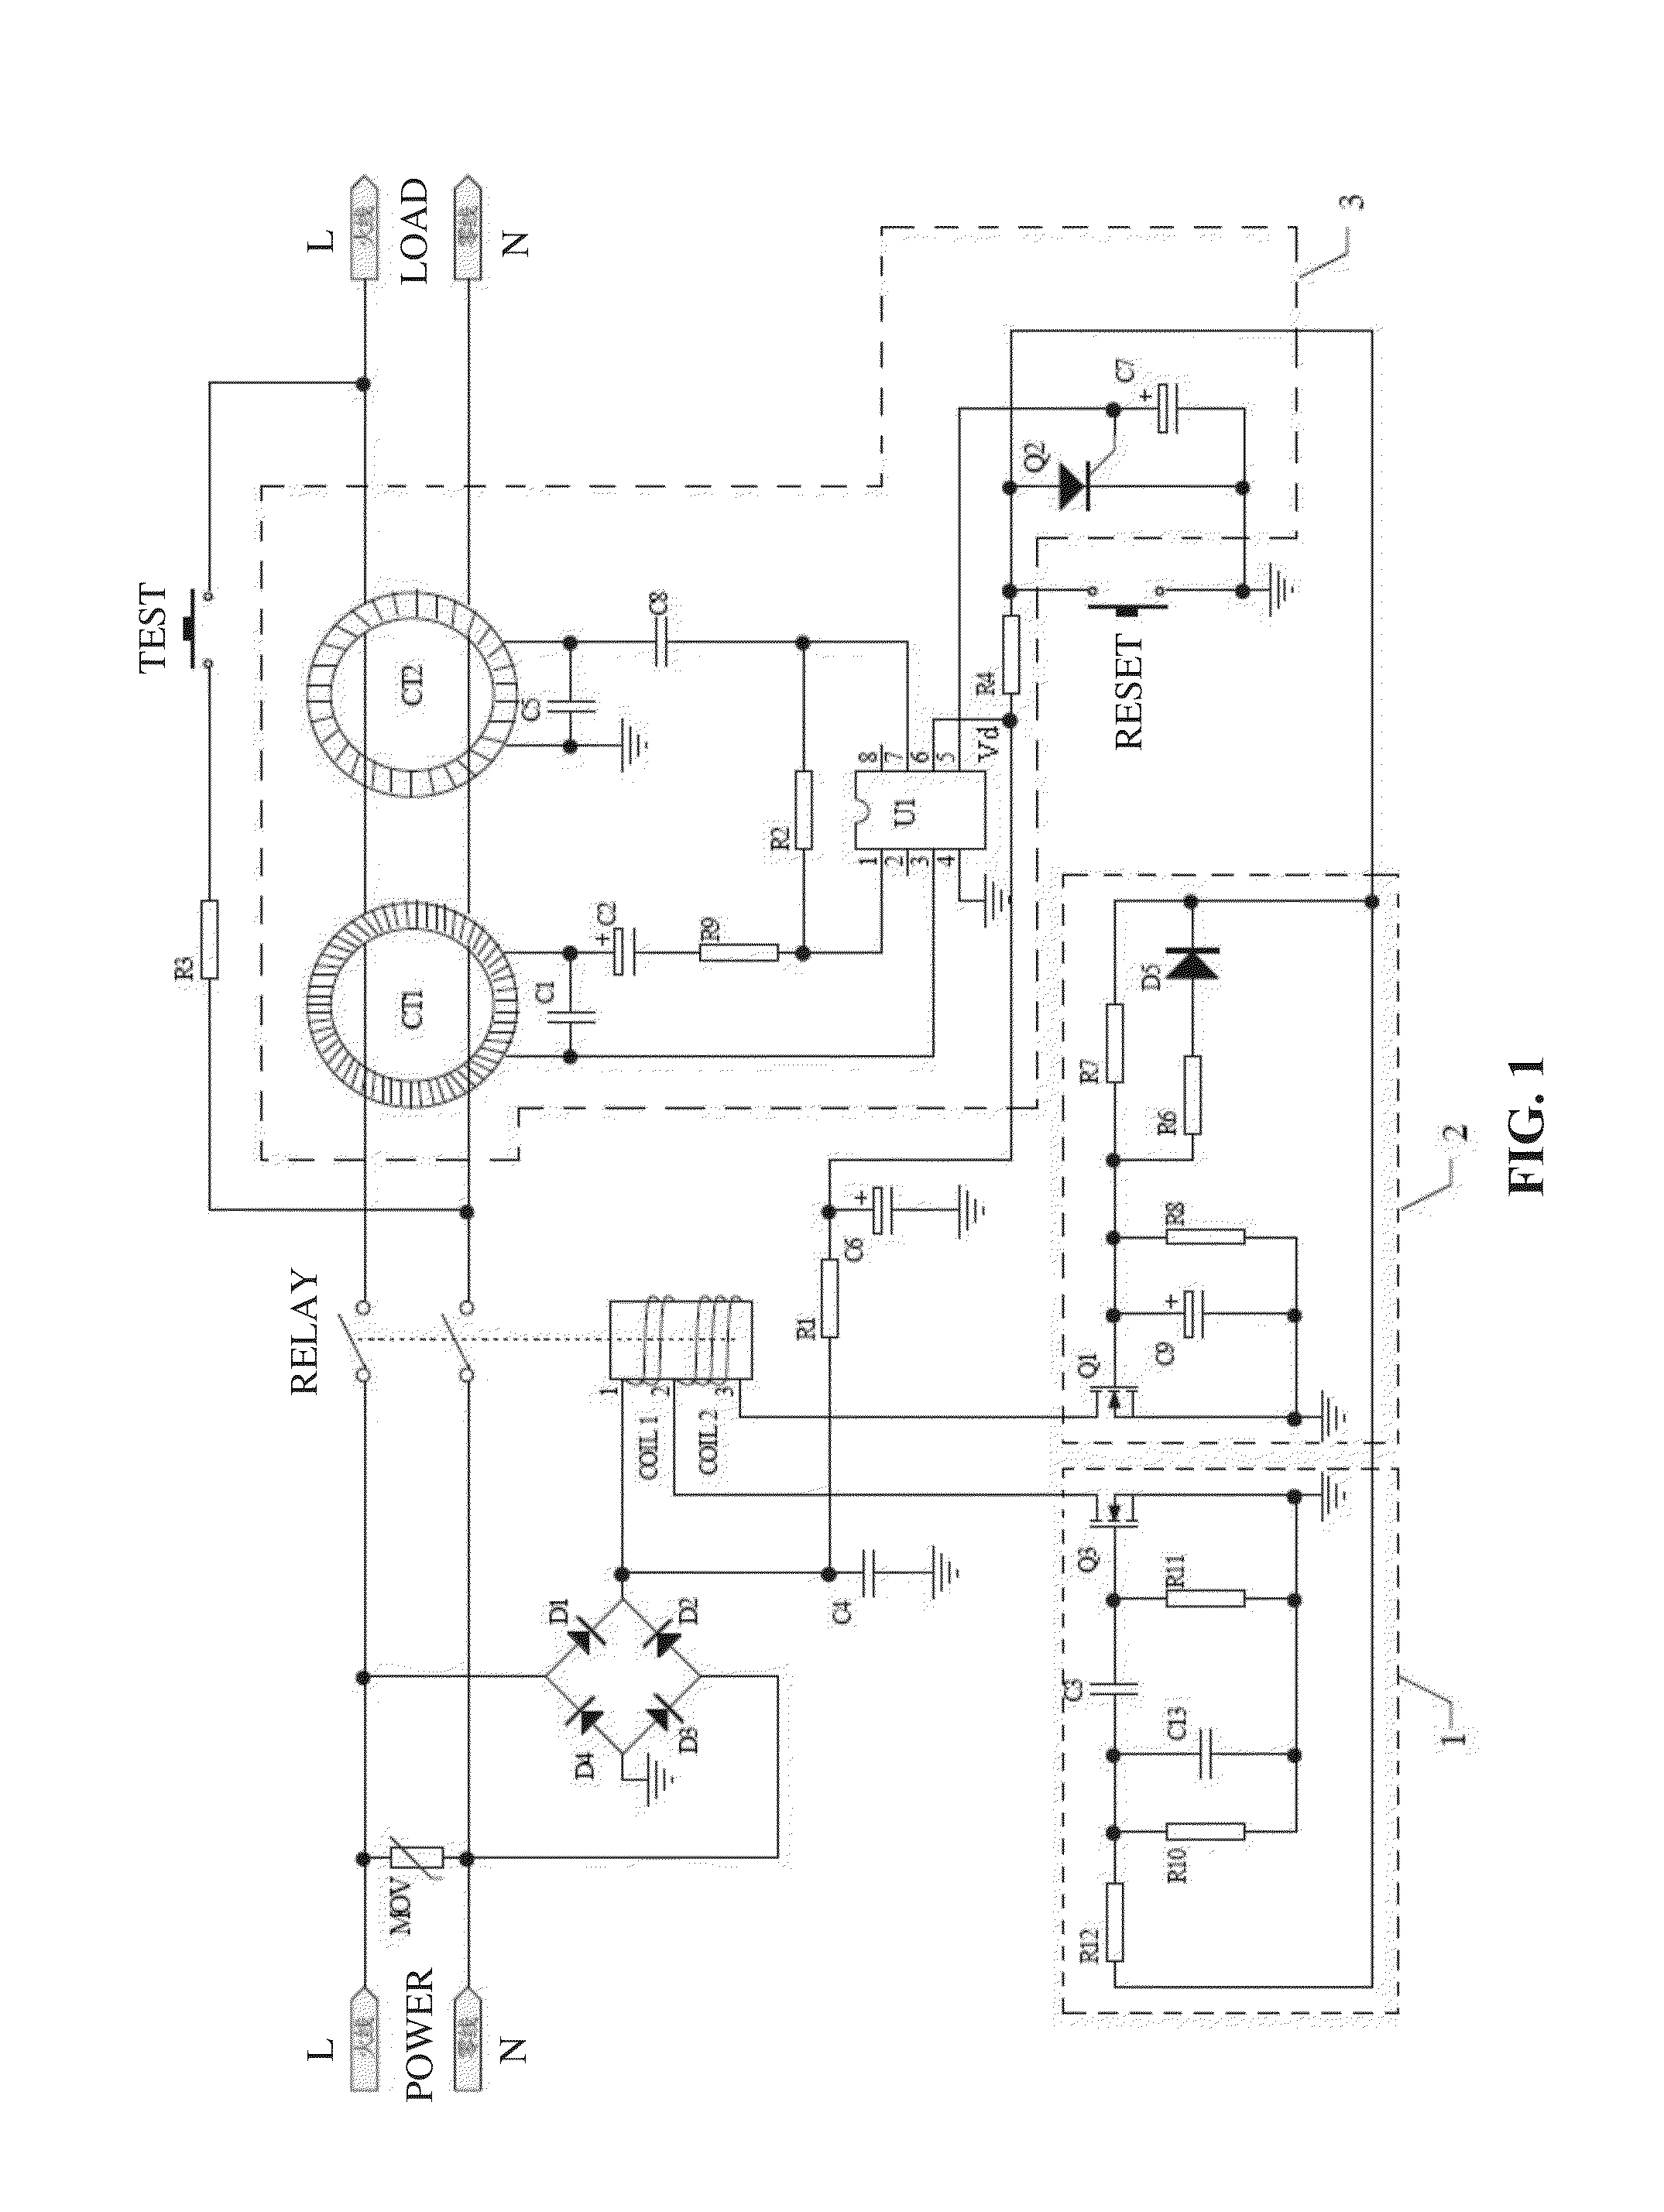 Ground-fault circuit interrupter